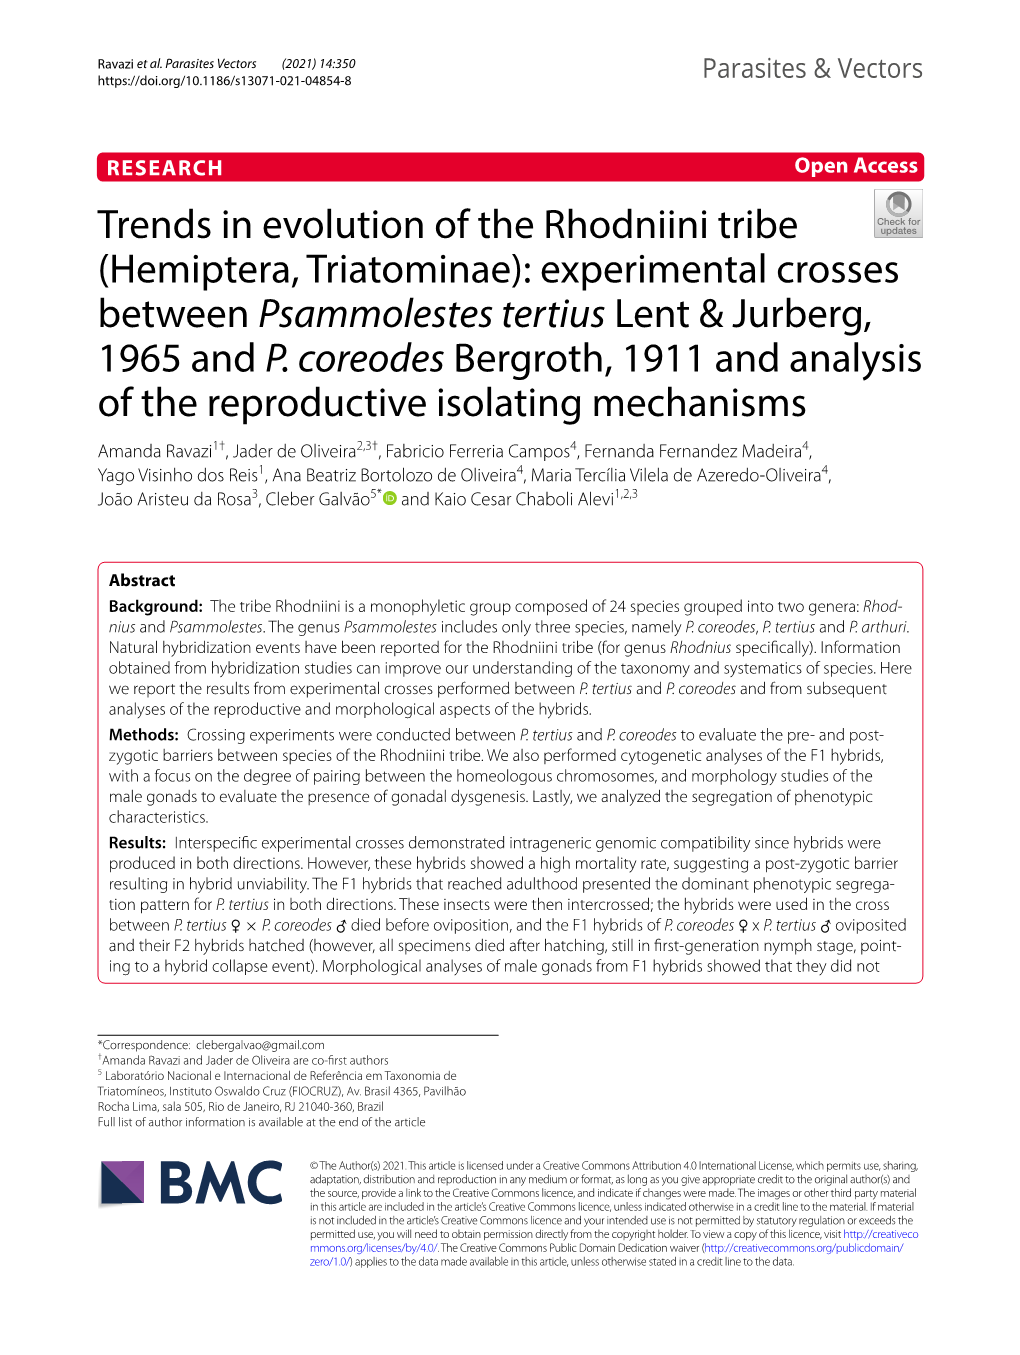 Trends in Evolution of the Rhodniini Tribe (Hemiptera, Triatominae): Experimental Crosses Between Psammolestes Tertius Lent &